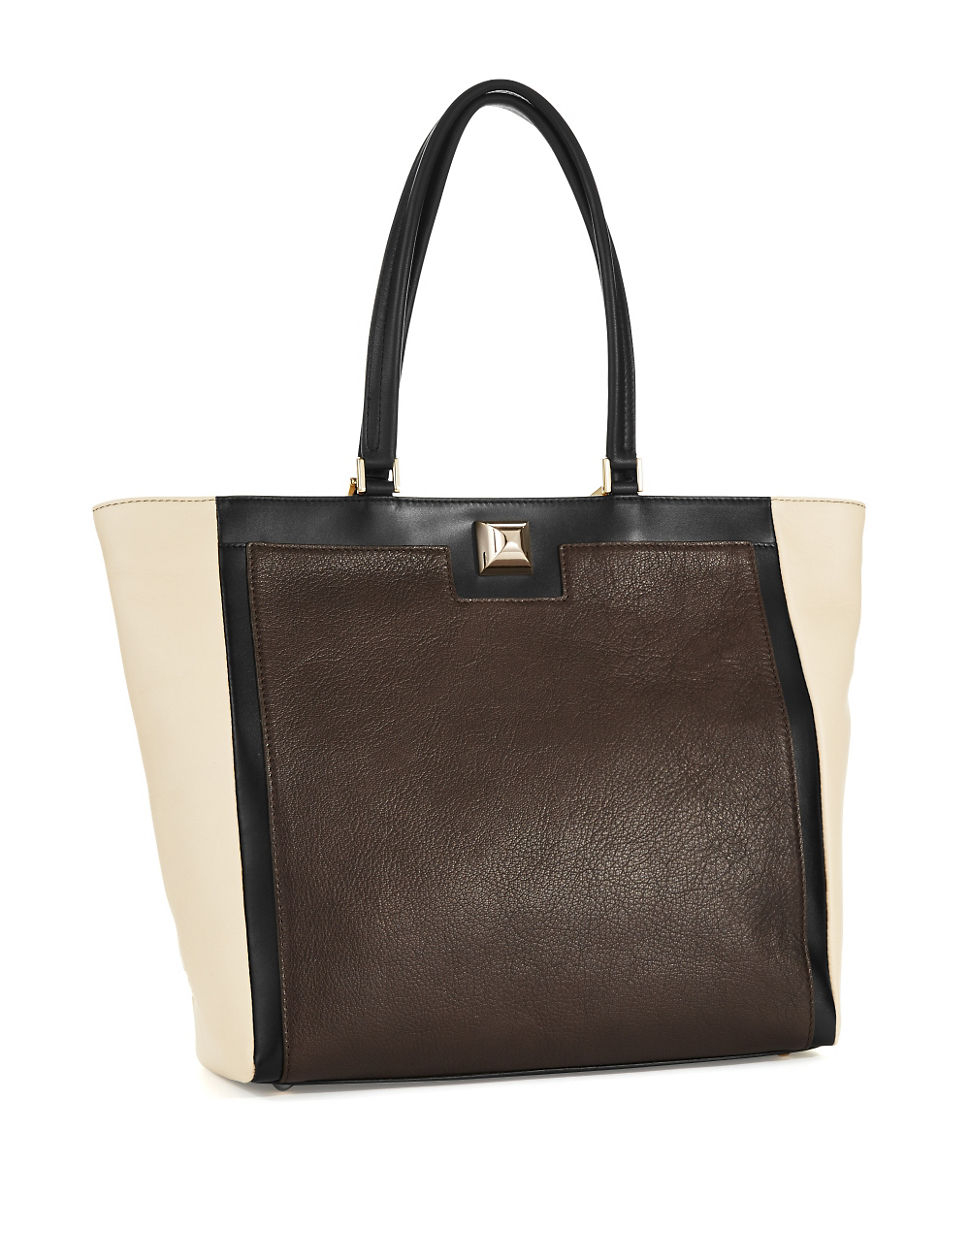 Furla Cortina Leather Tote Bag in Brown | Lyst